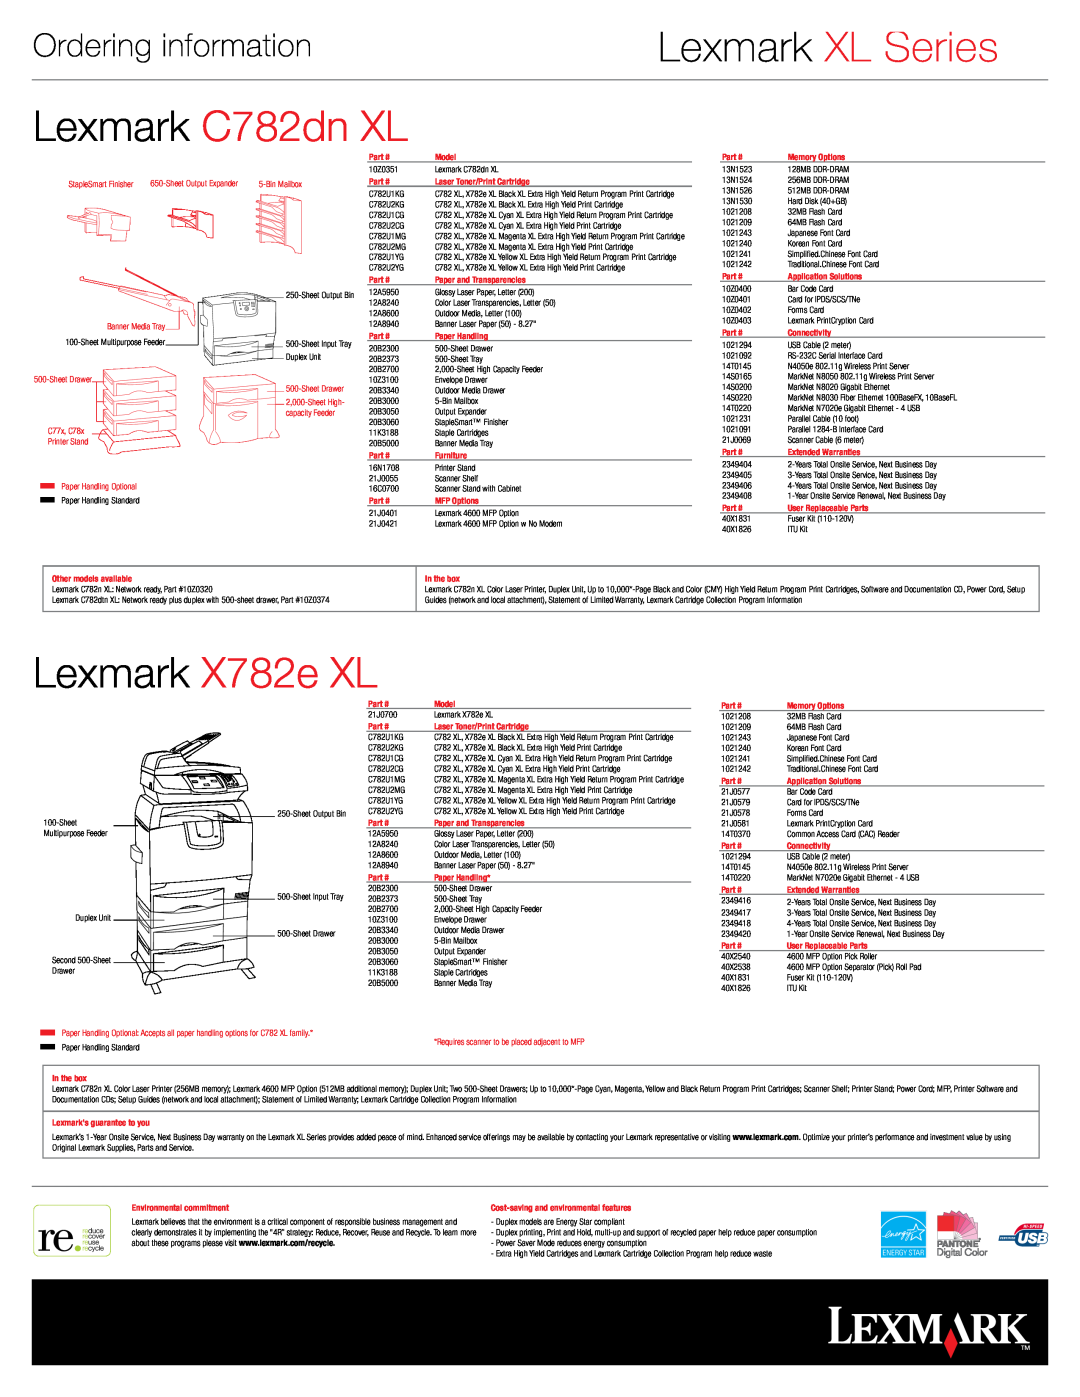 Lexmark C782n XL, C782dtn XL setup guide Lexmark C782dn XL, Lexmark X782e XL, Ordering information, Lexmark XL Series 